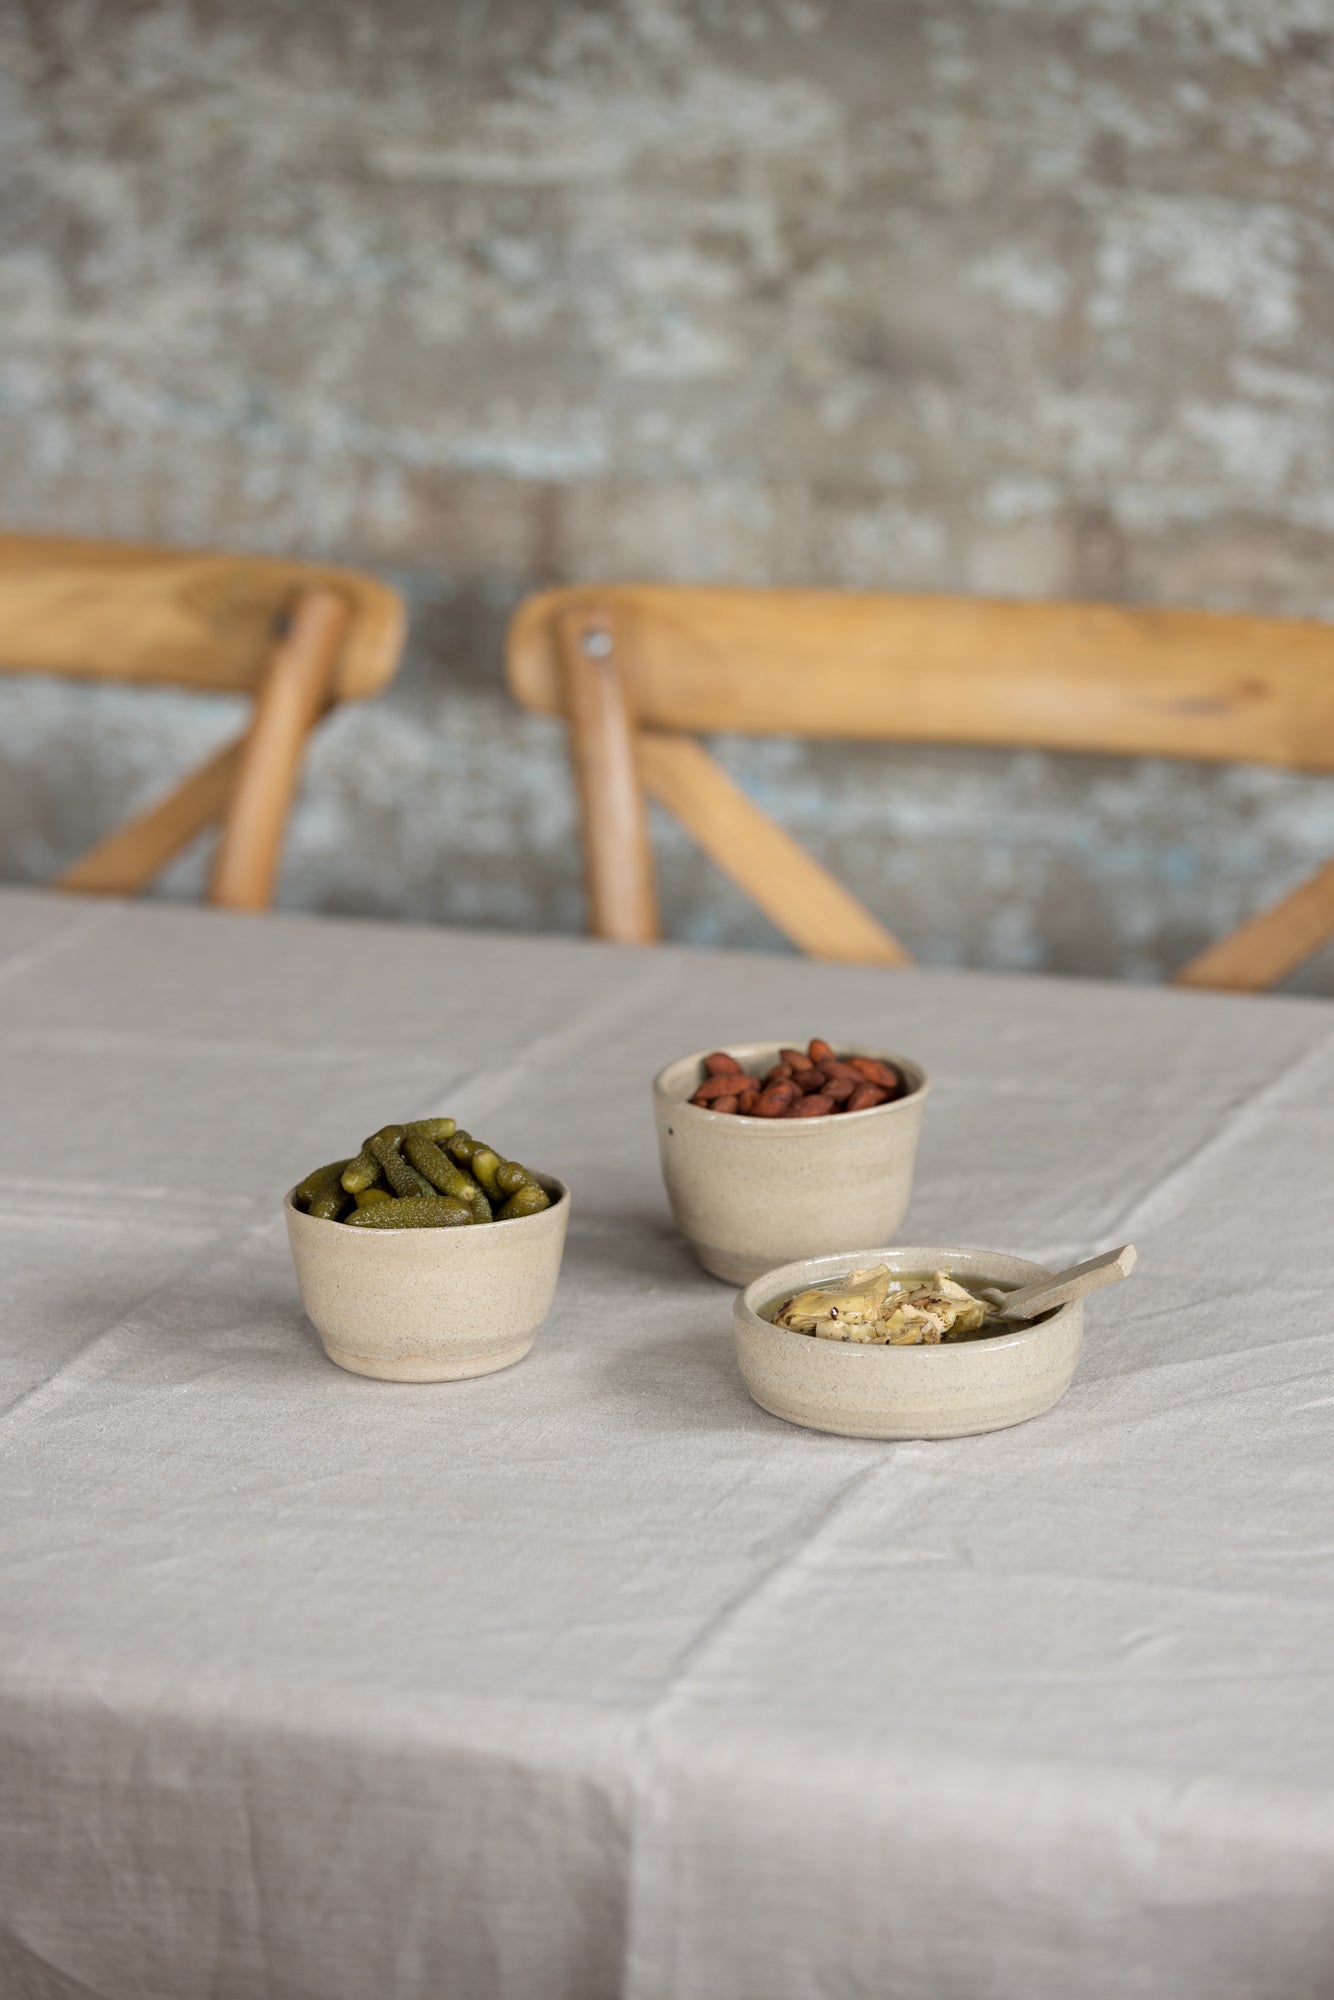 hemp linen tablecloth - clean edge